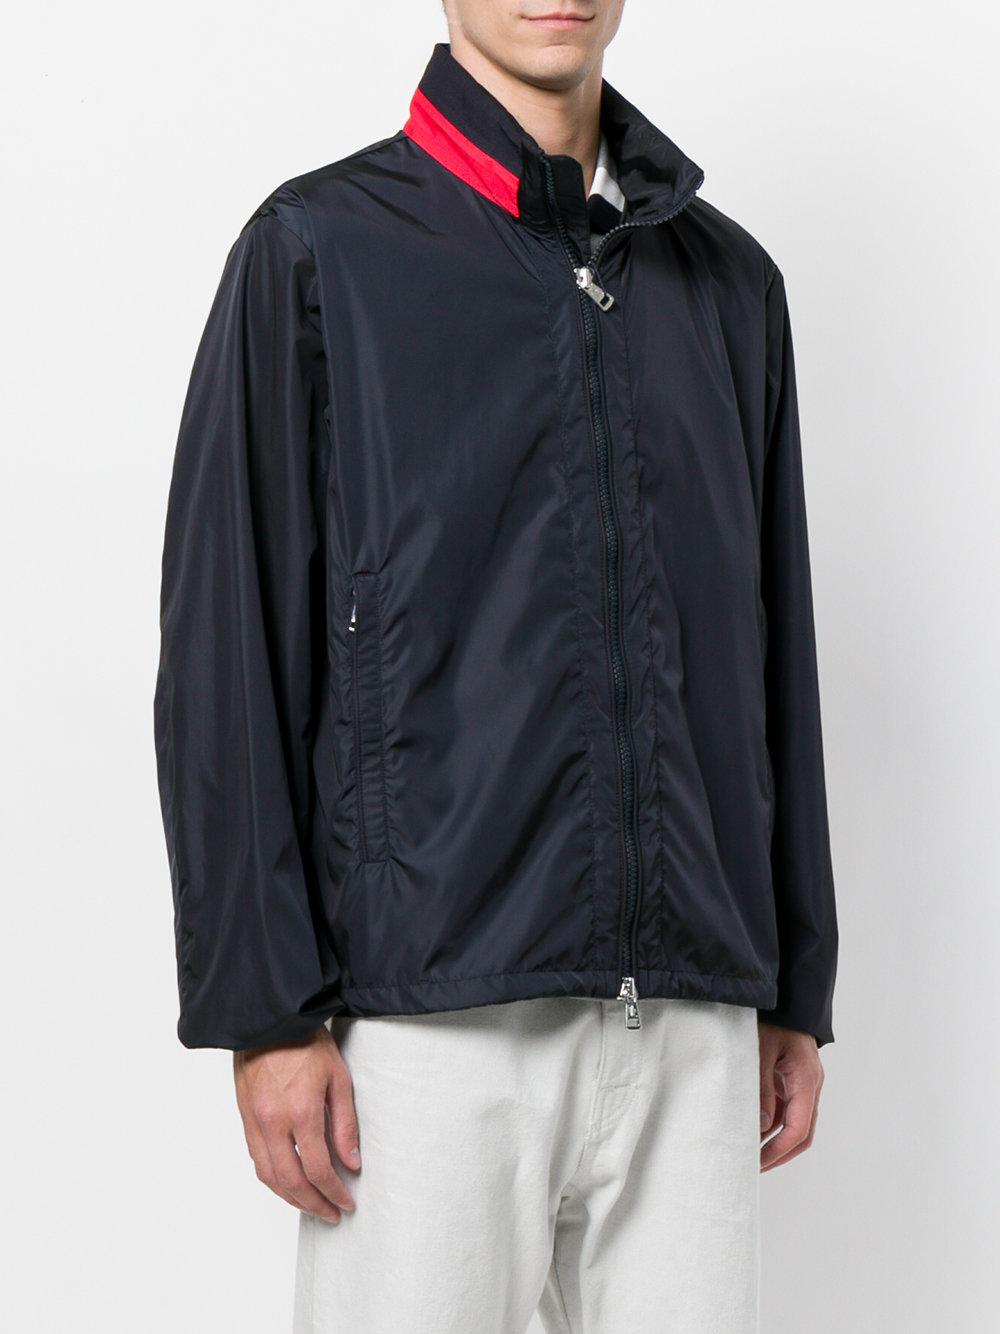 moncler goulier windbreaker jacket